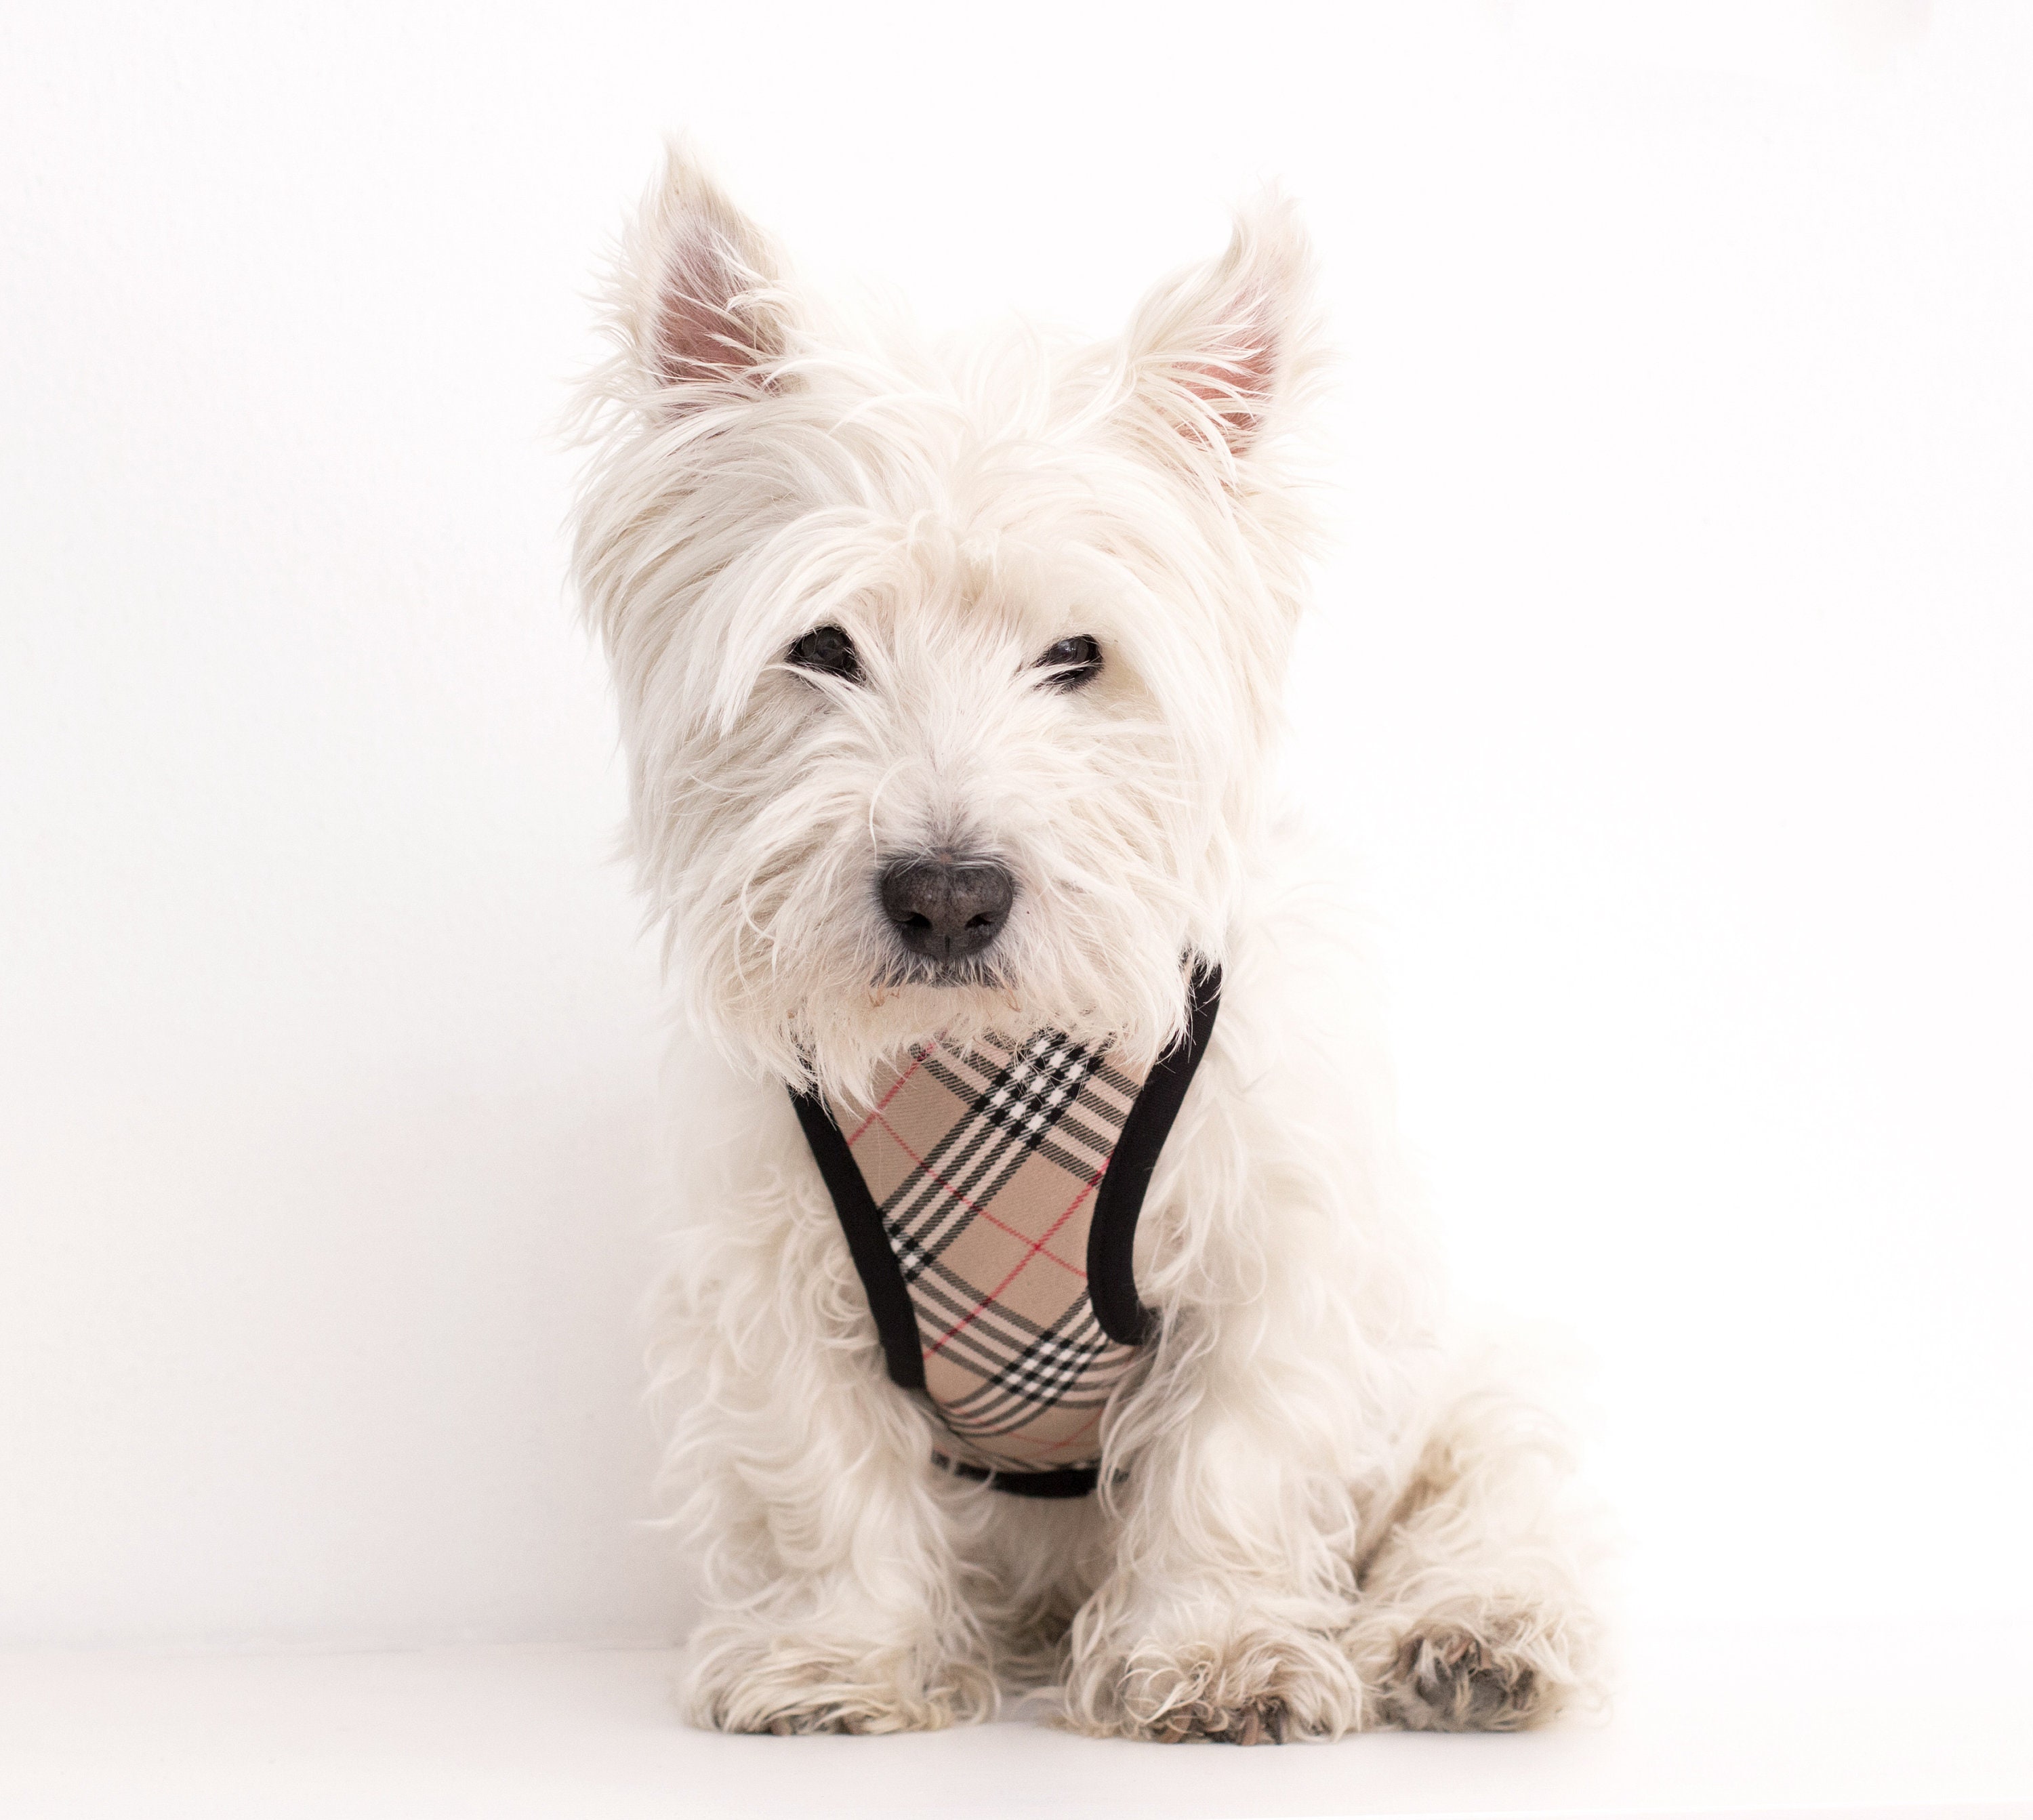 Burberry Dog Collar - Etsy